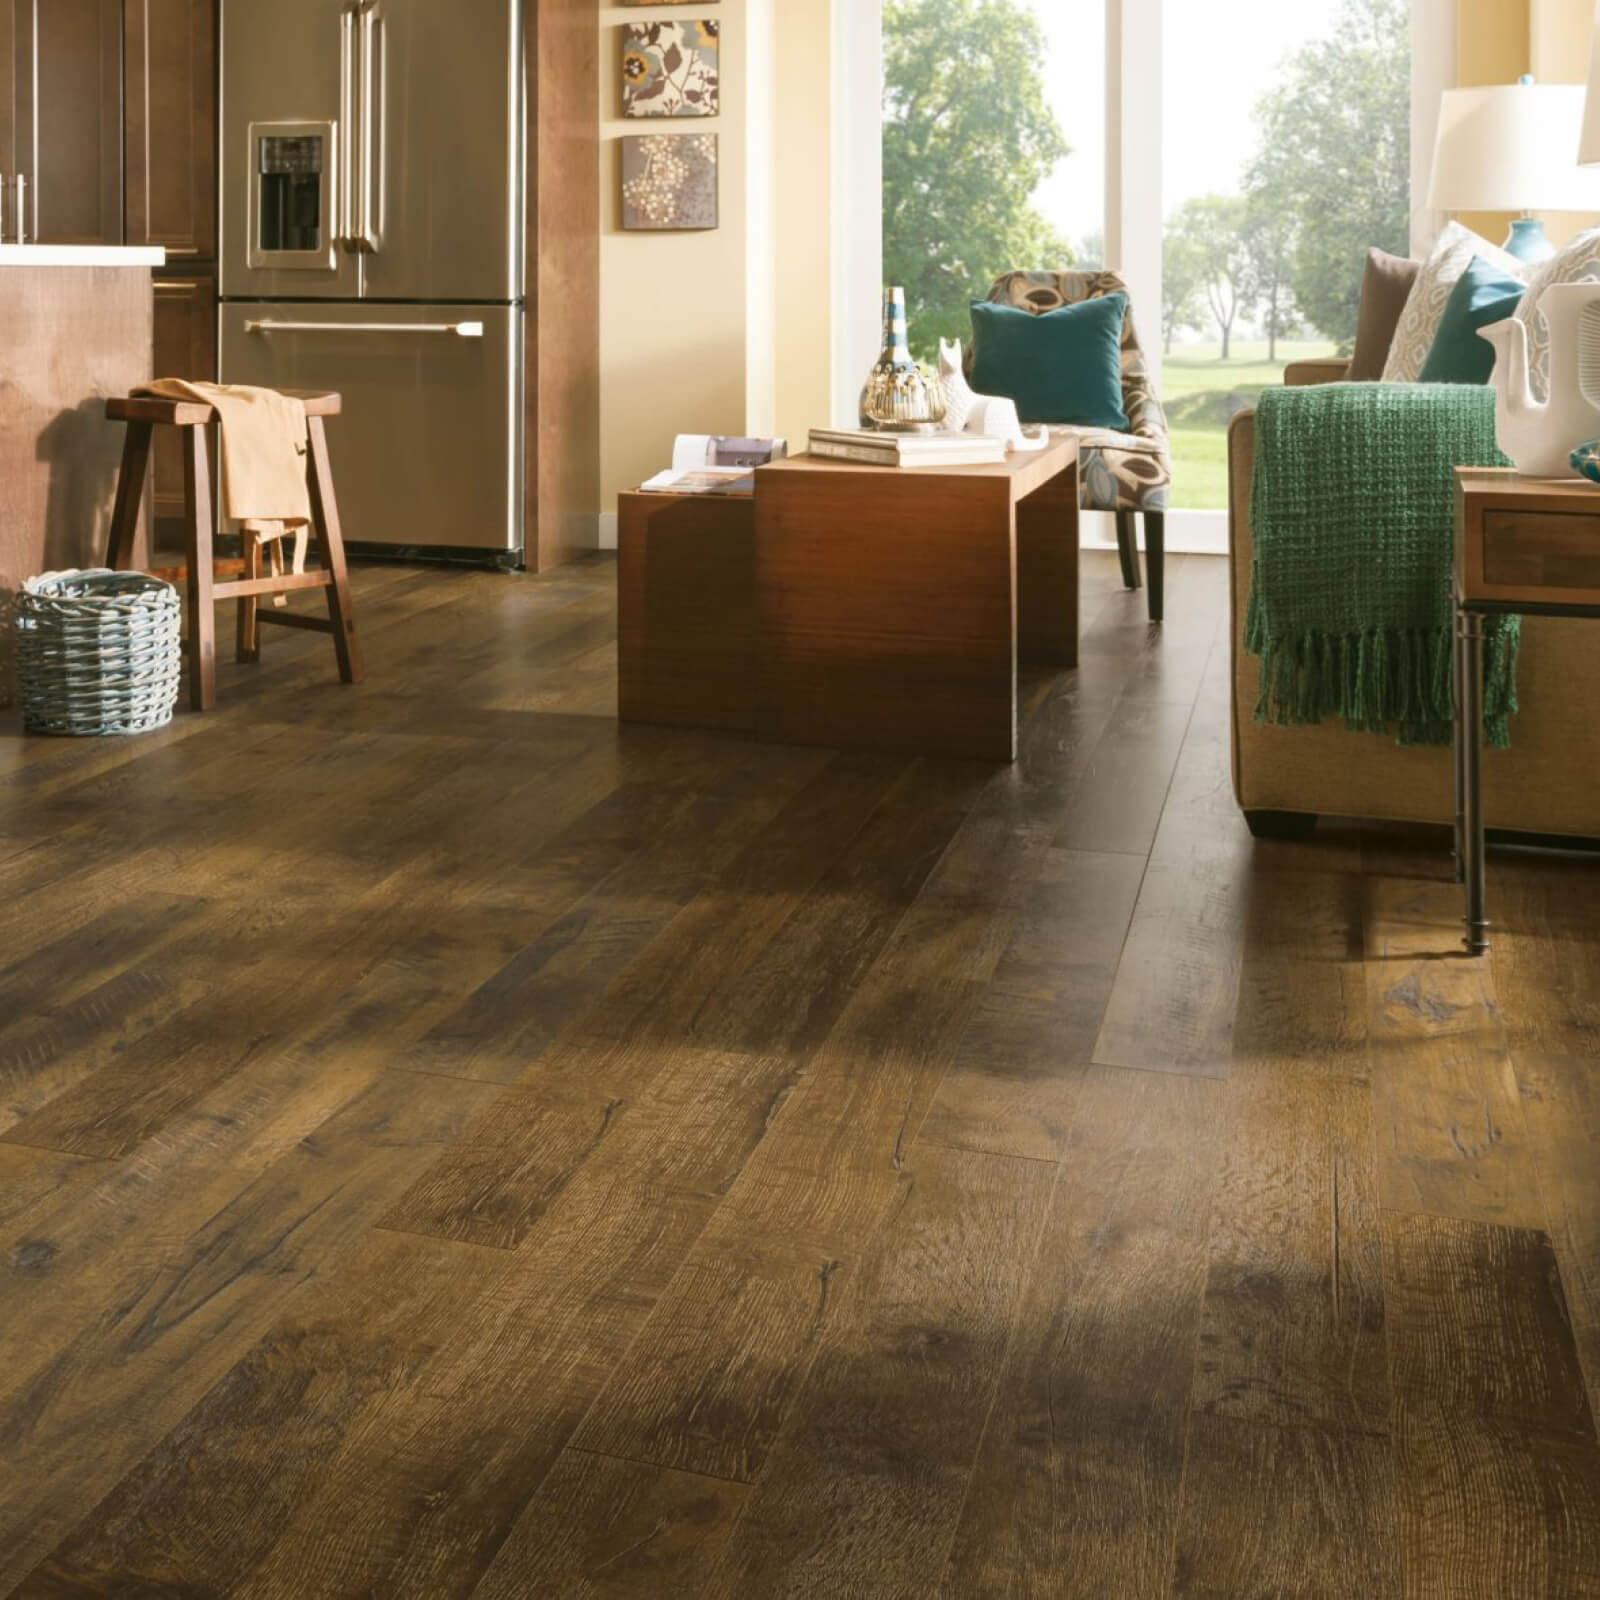 luxury vinyl tile flooring in home | Floorco Premium